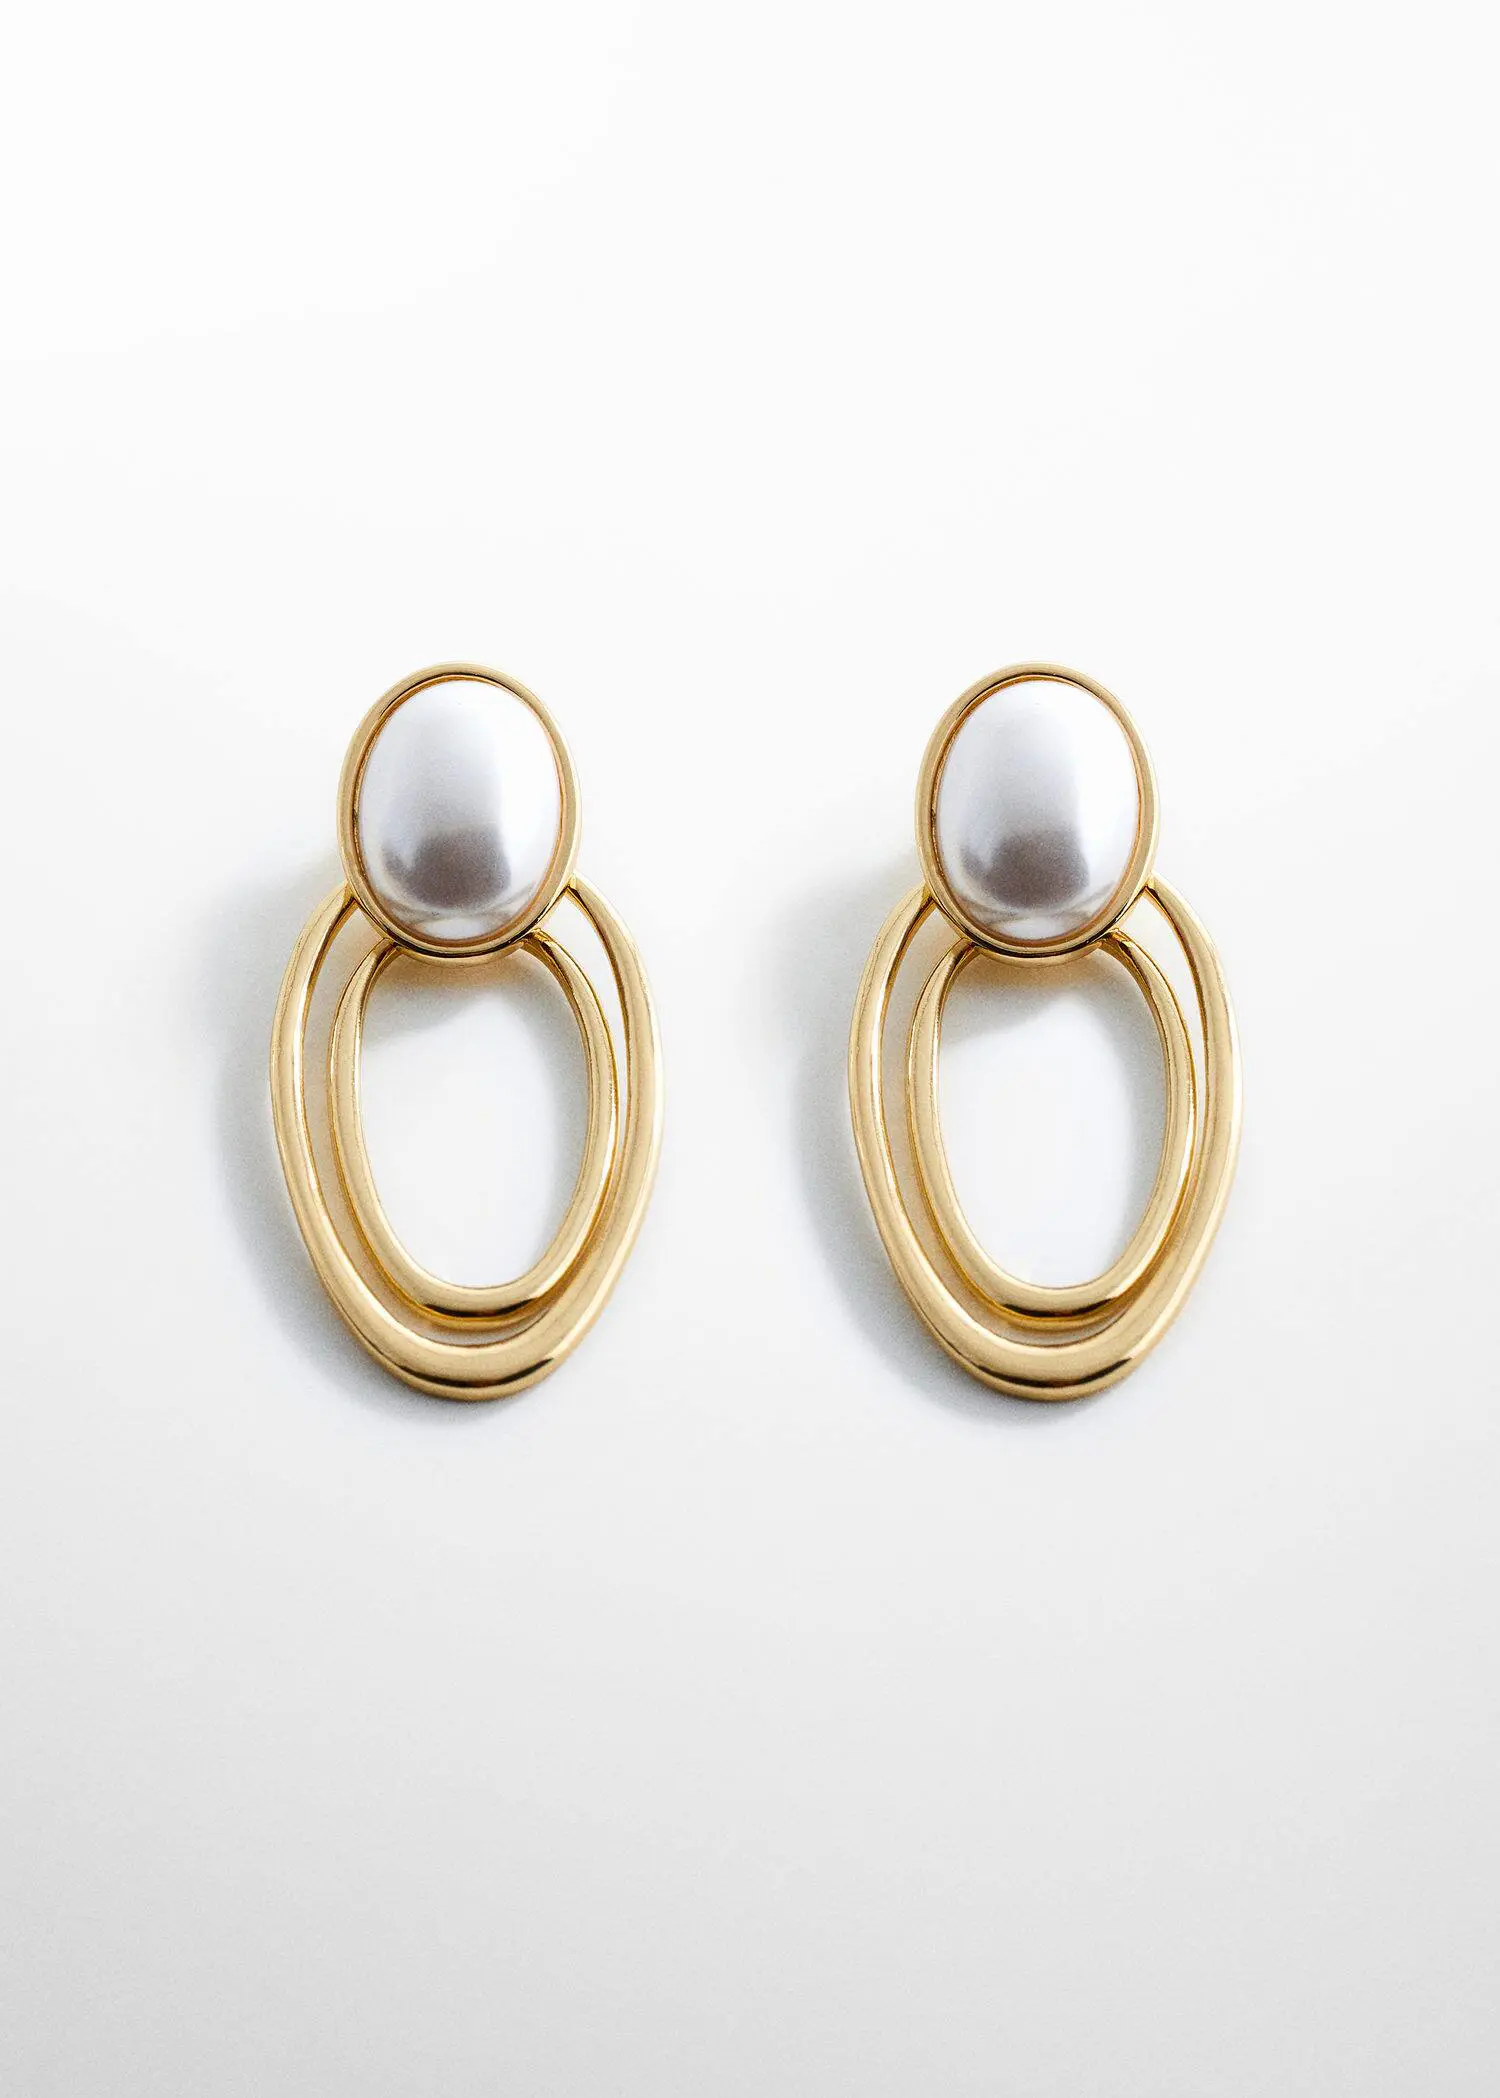 Mango Mother-of-pearl oval earrings. 1